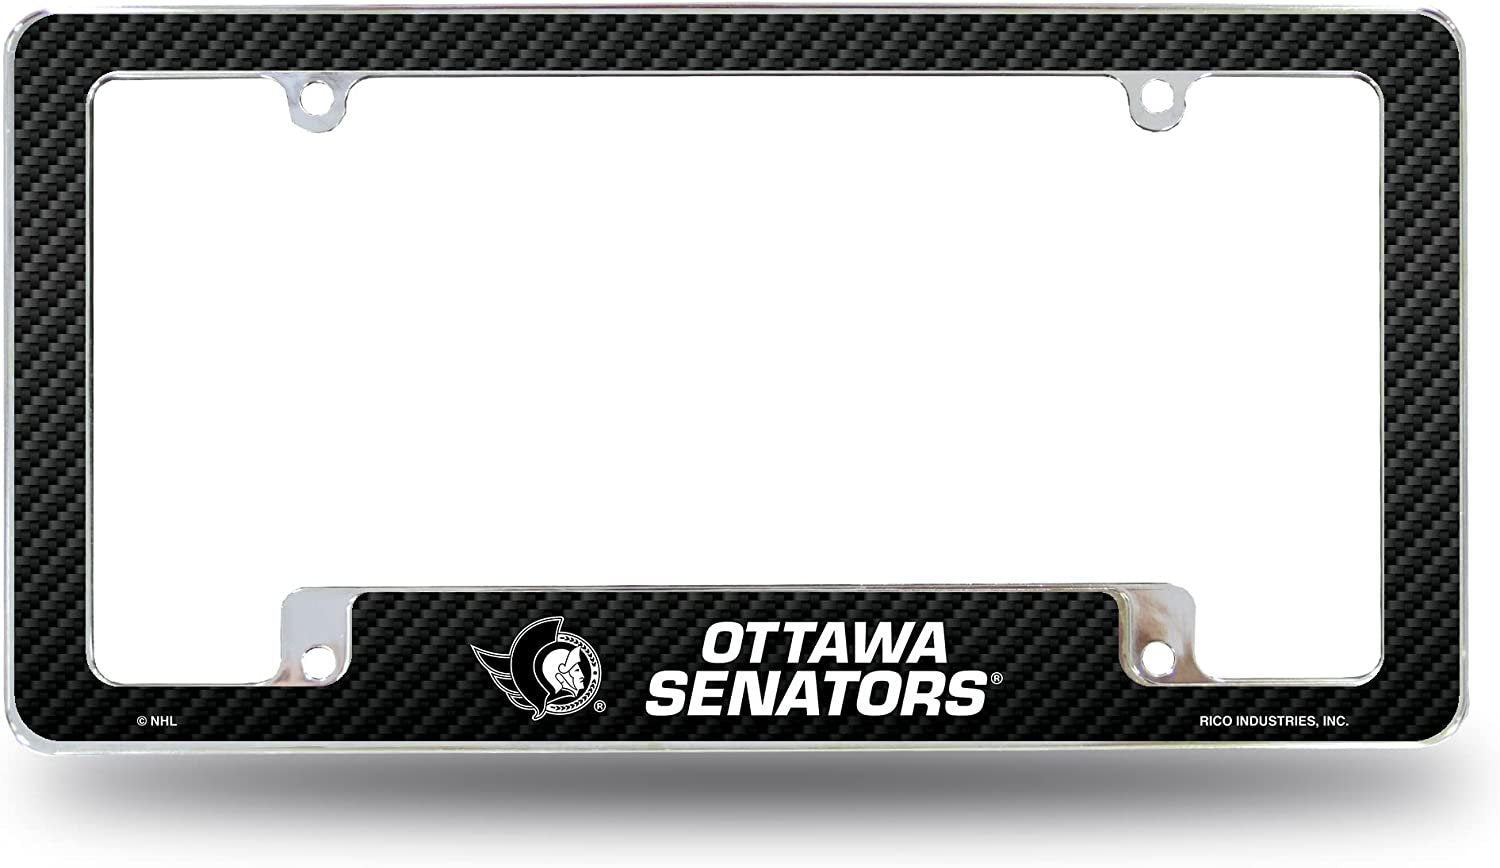 Ottawa Senators Metal License Plate Frame Chrome Tag Cover Carbon Fiber Design 6x12 Inch